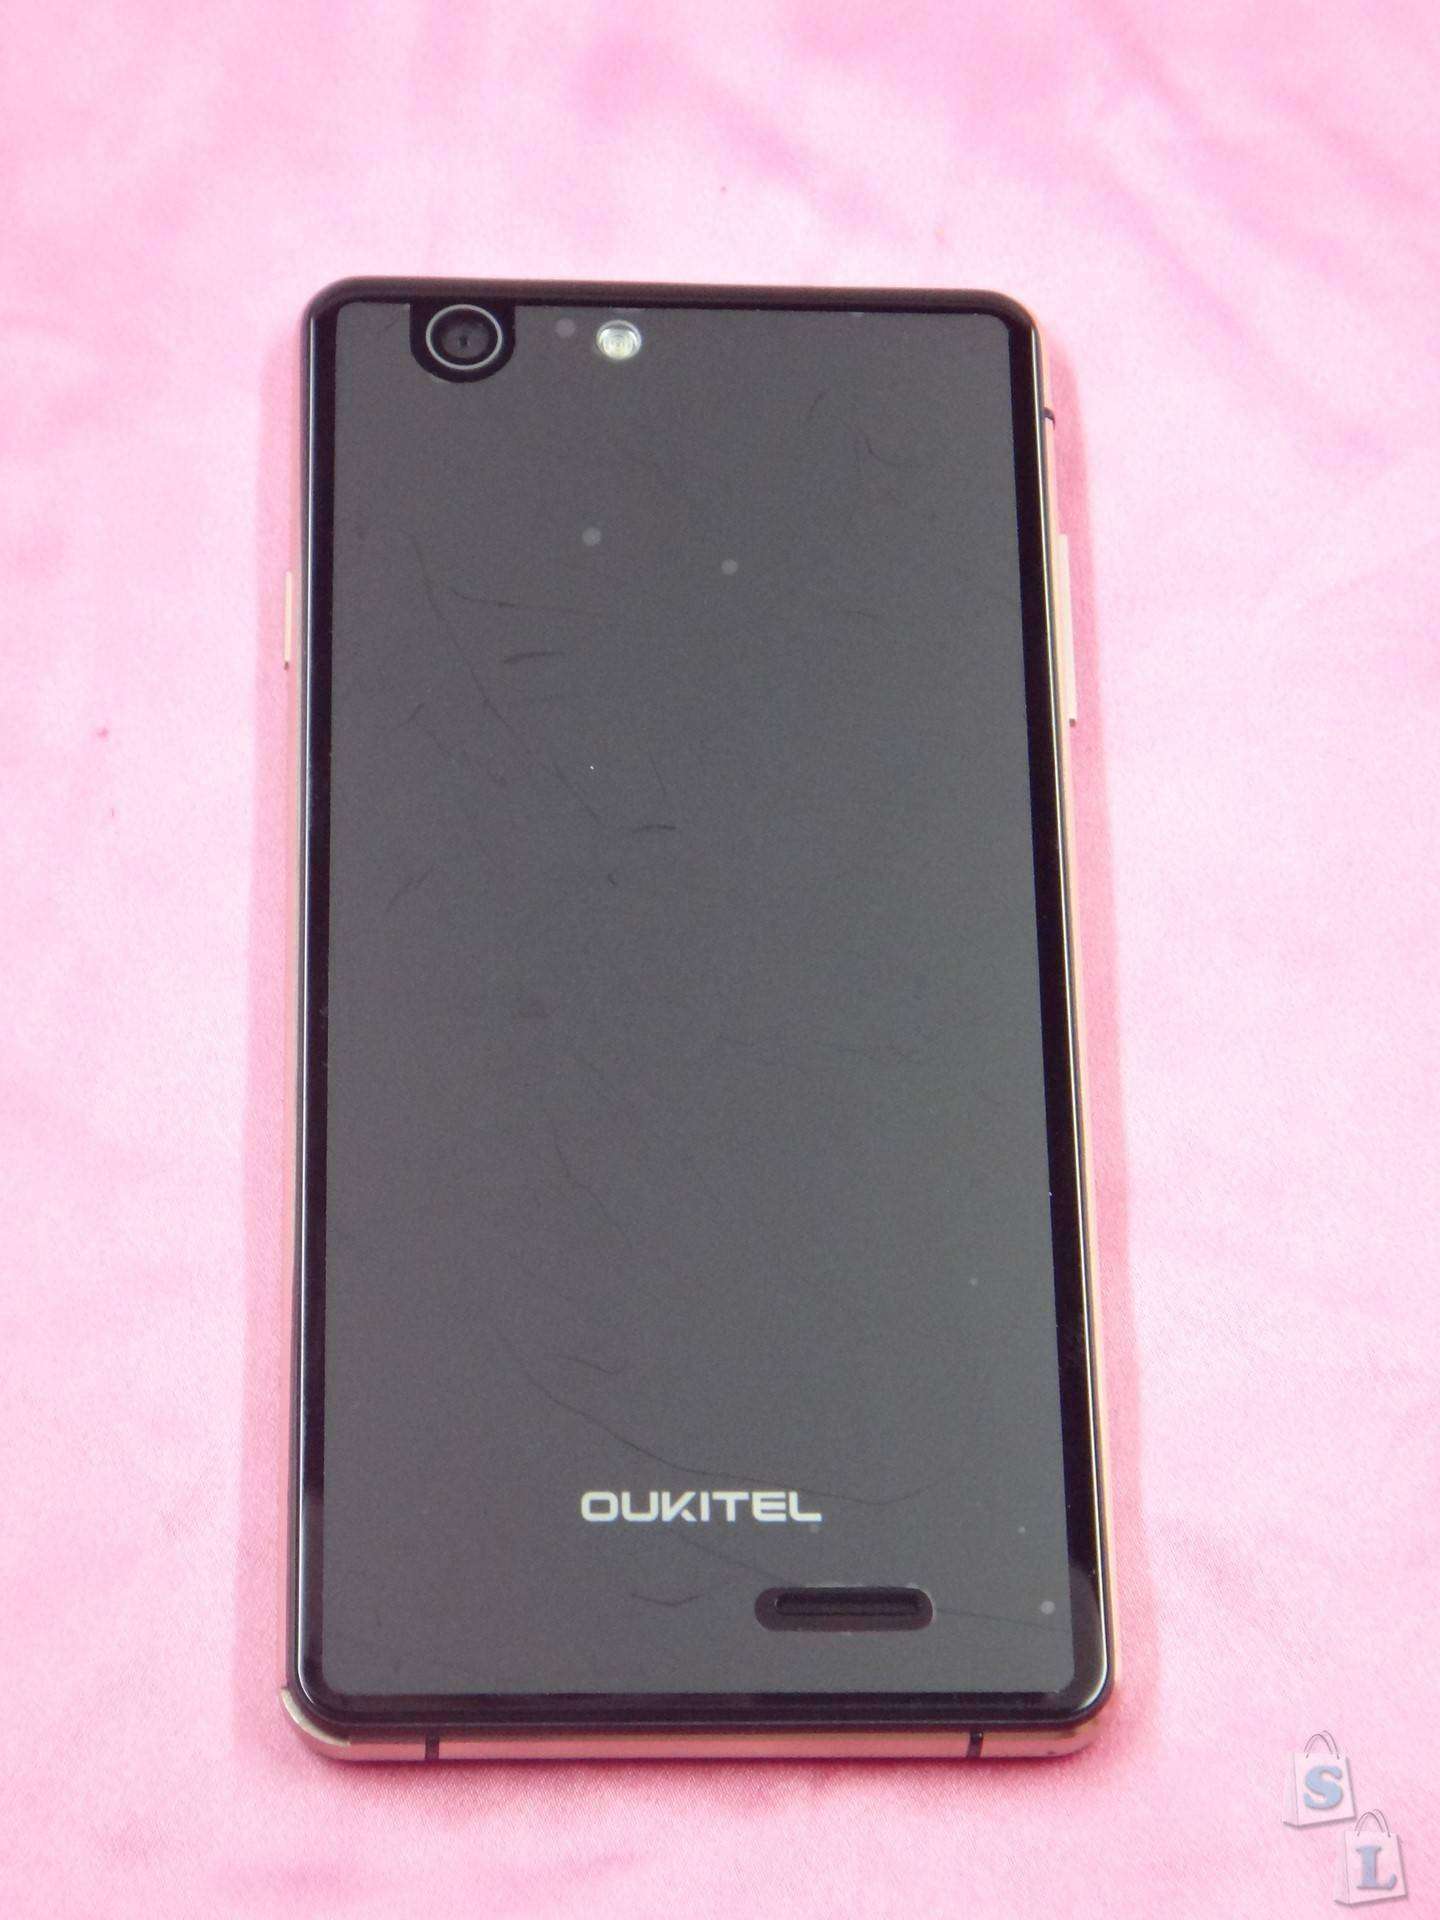 Pandawill: Oukitel U2 бюджетный смартфон стекло и метал в одном корпусе